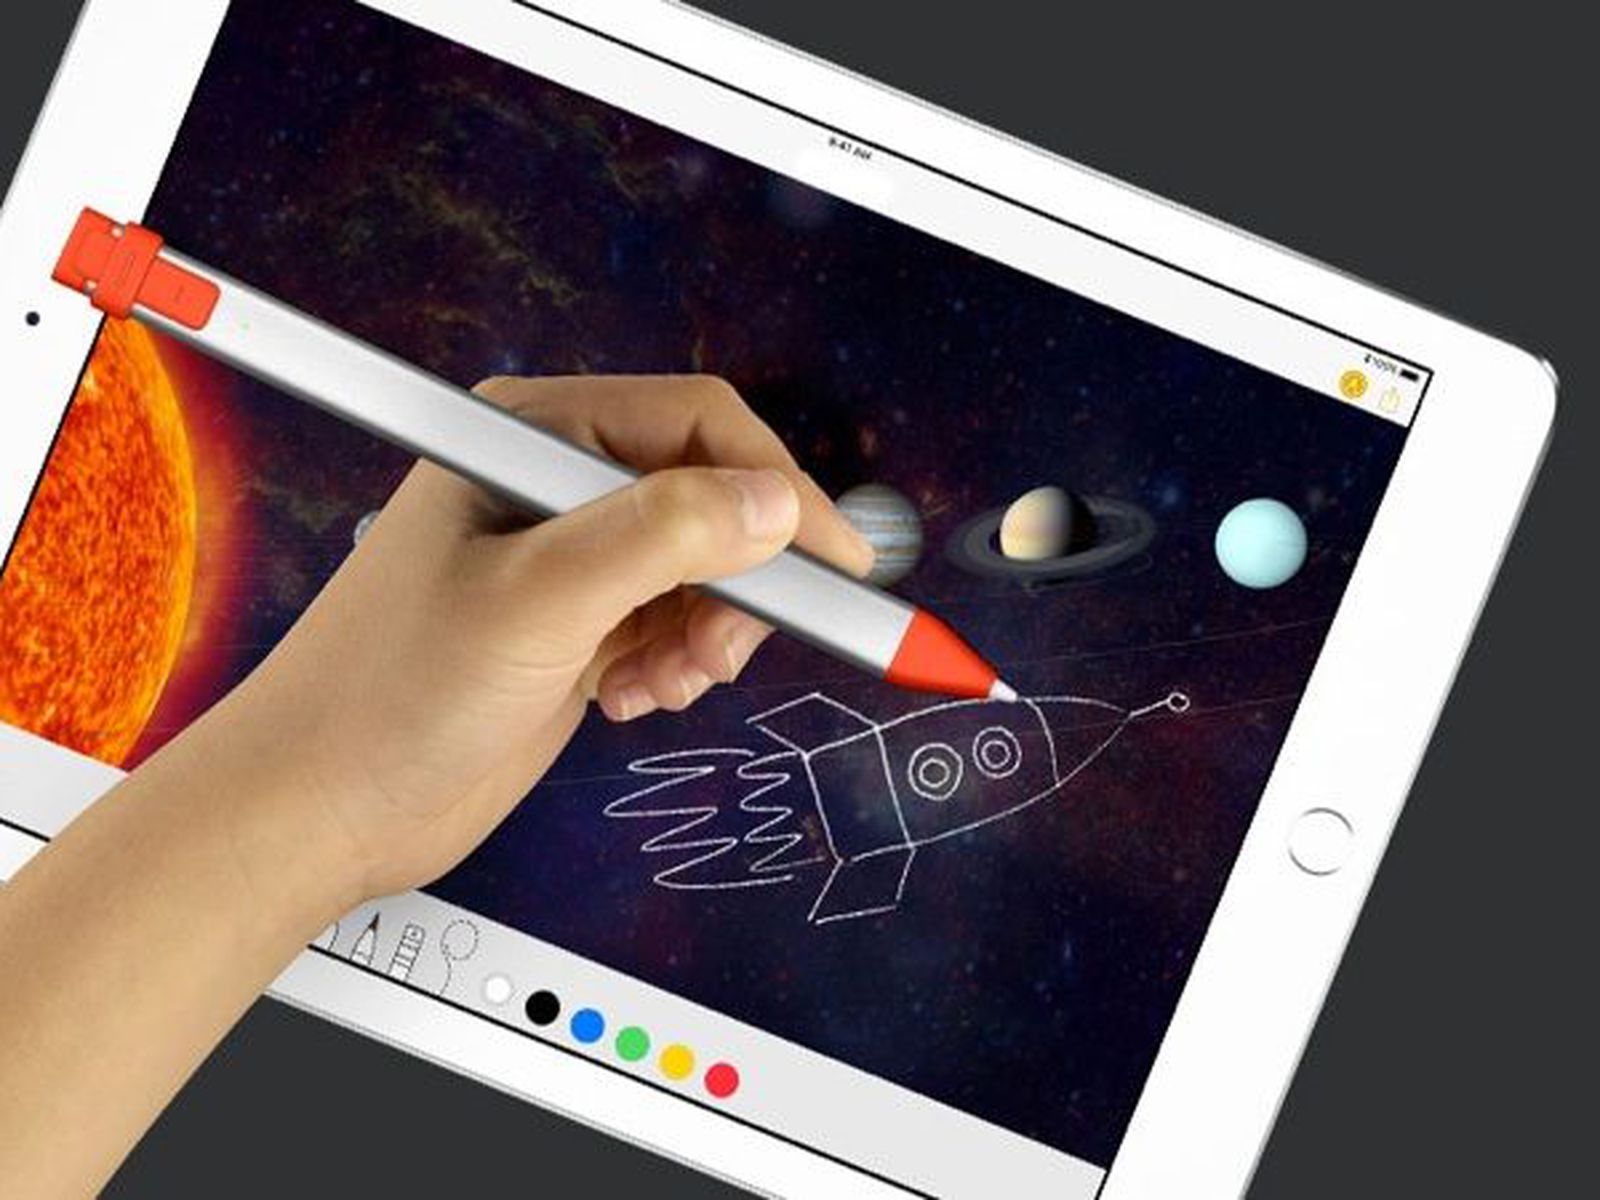 iPad Logitech Crayon Guide –